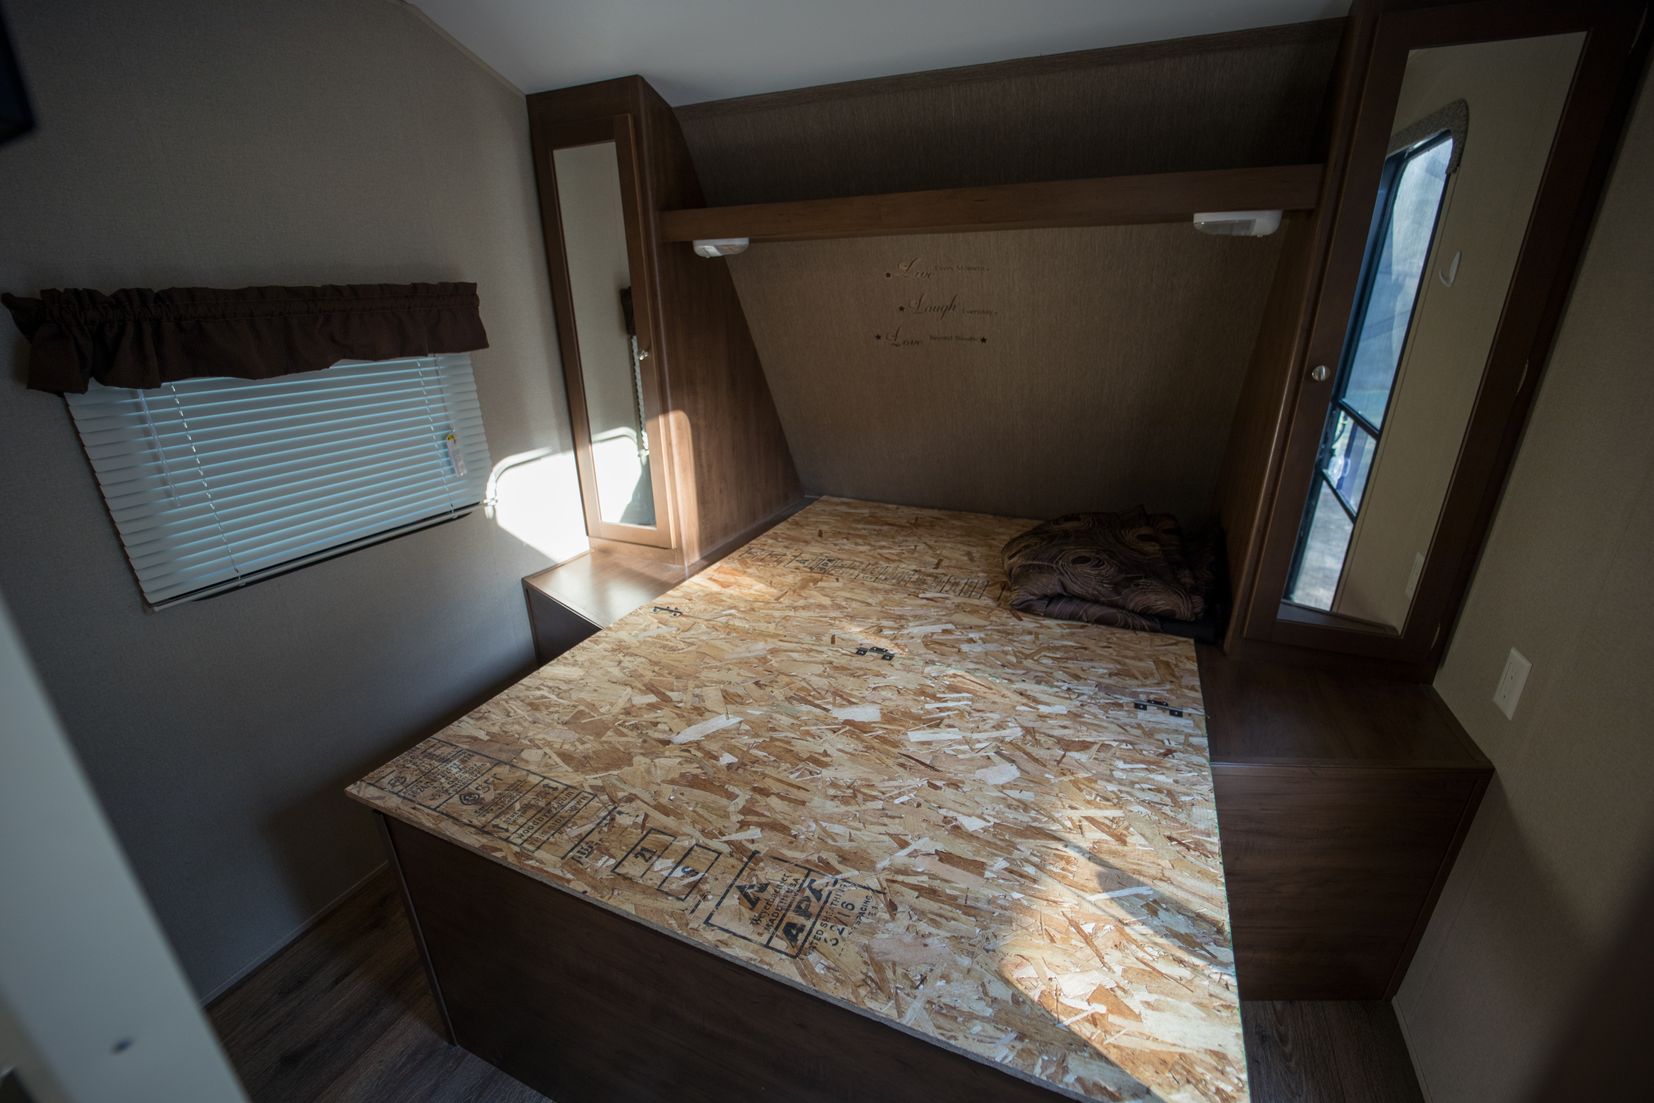 Original bedroom with dark wood trim and dirty gray walls.